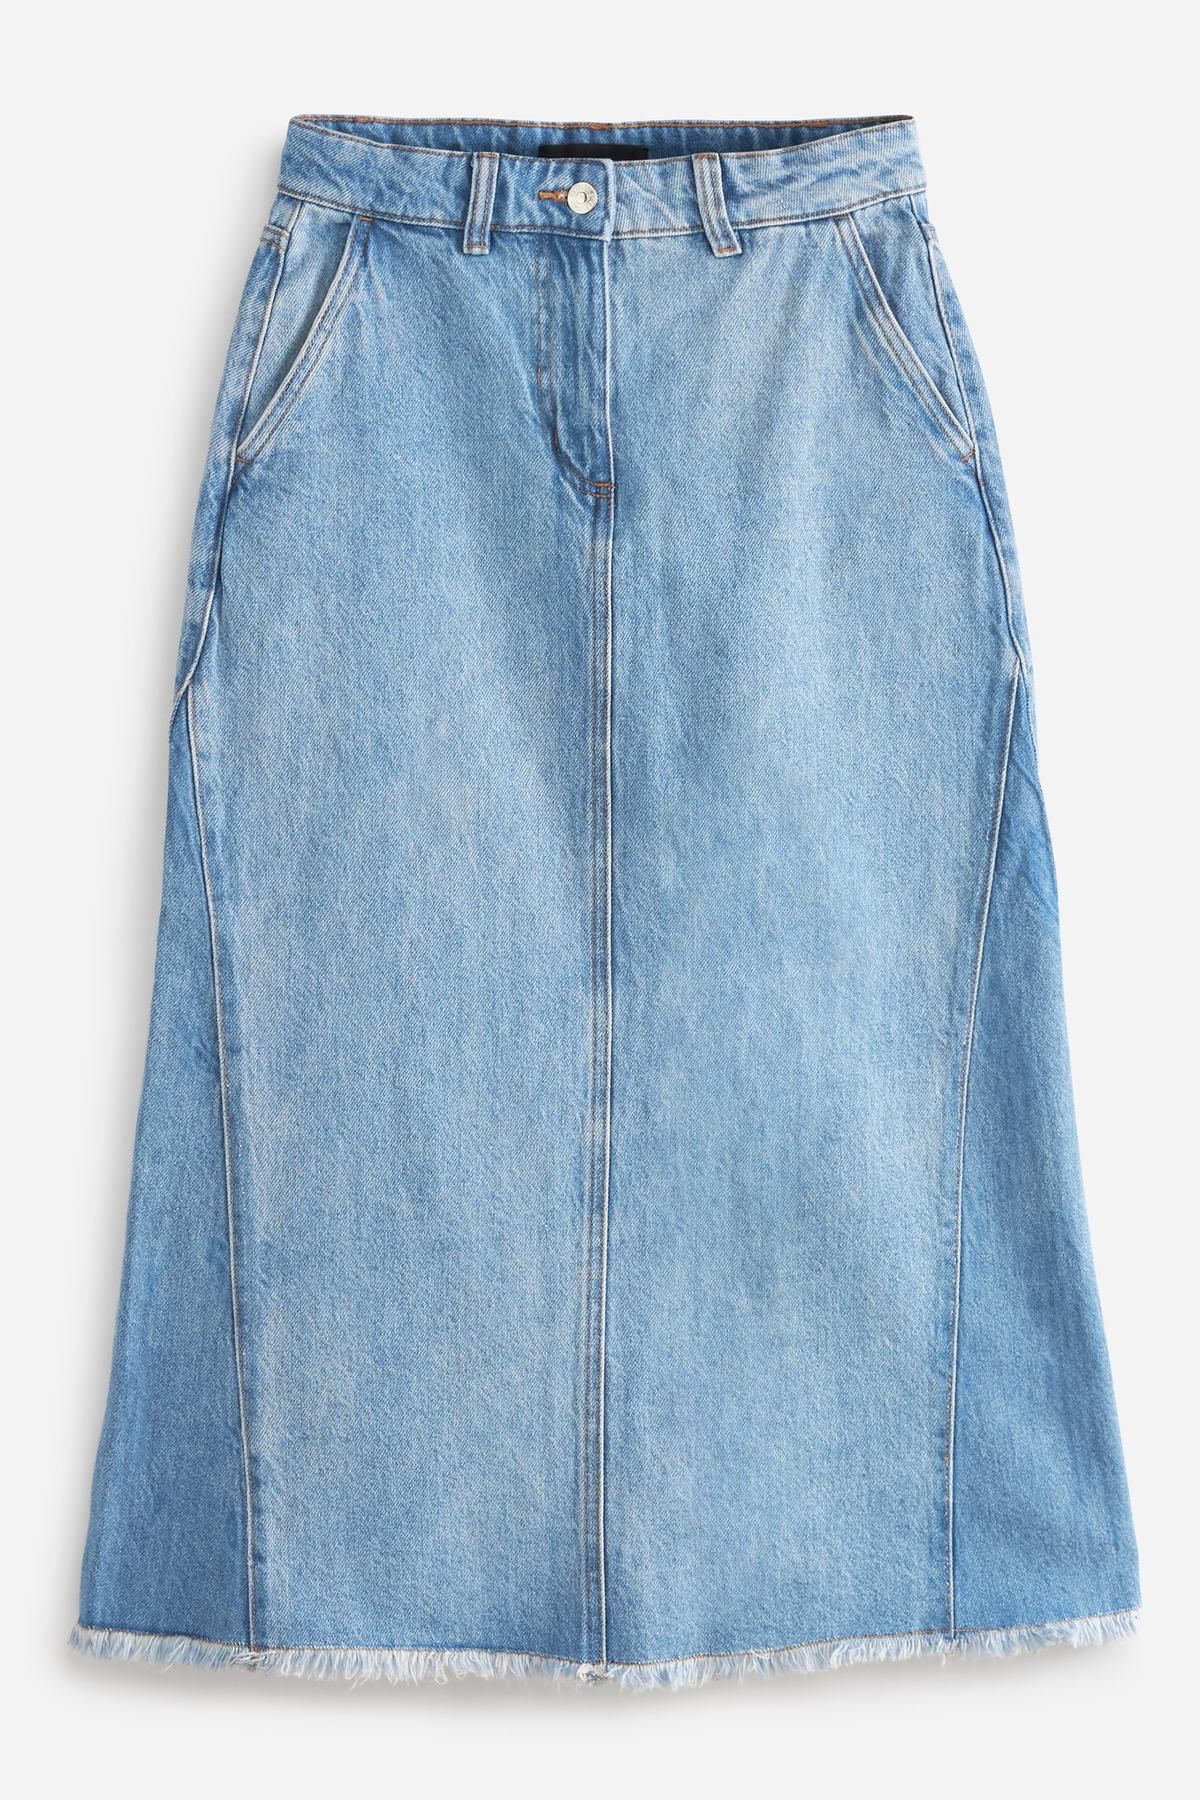 Adrift Denim Midi Skirt in Light Wash - Cotton Stretch, A-Line Silhouette –  Adrift Clothing